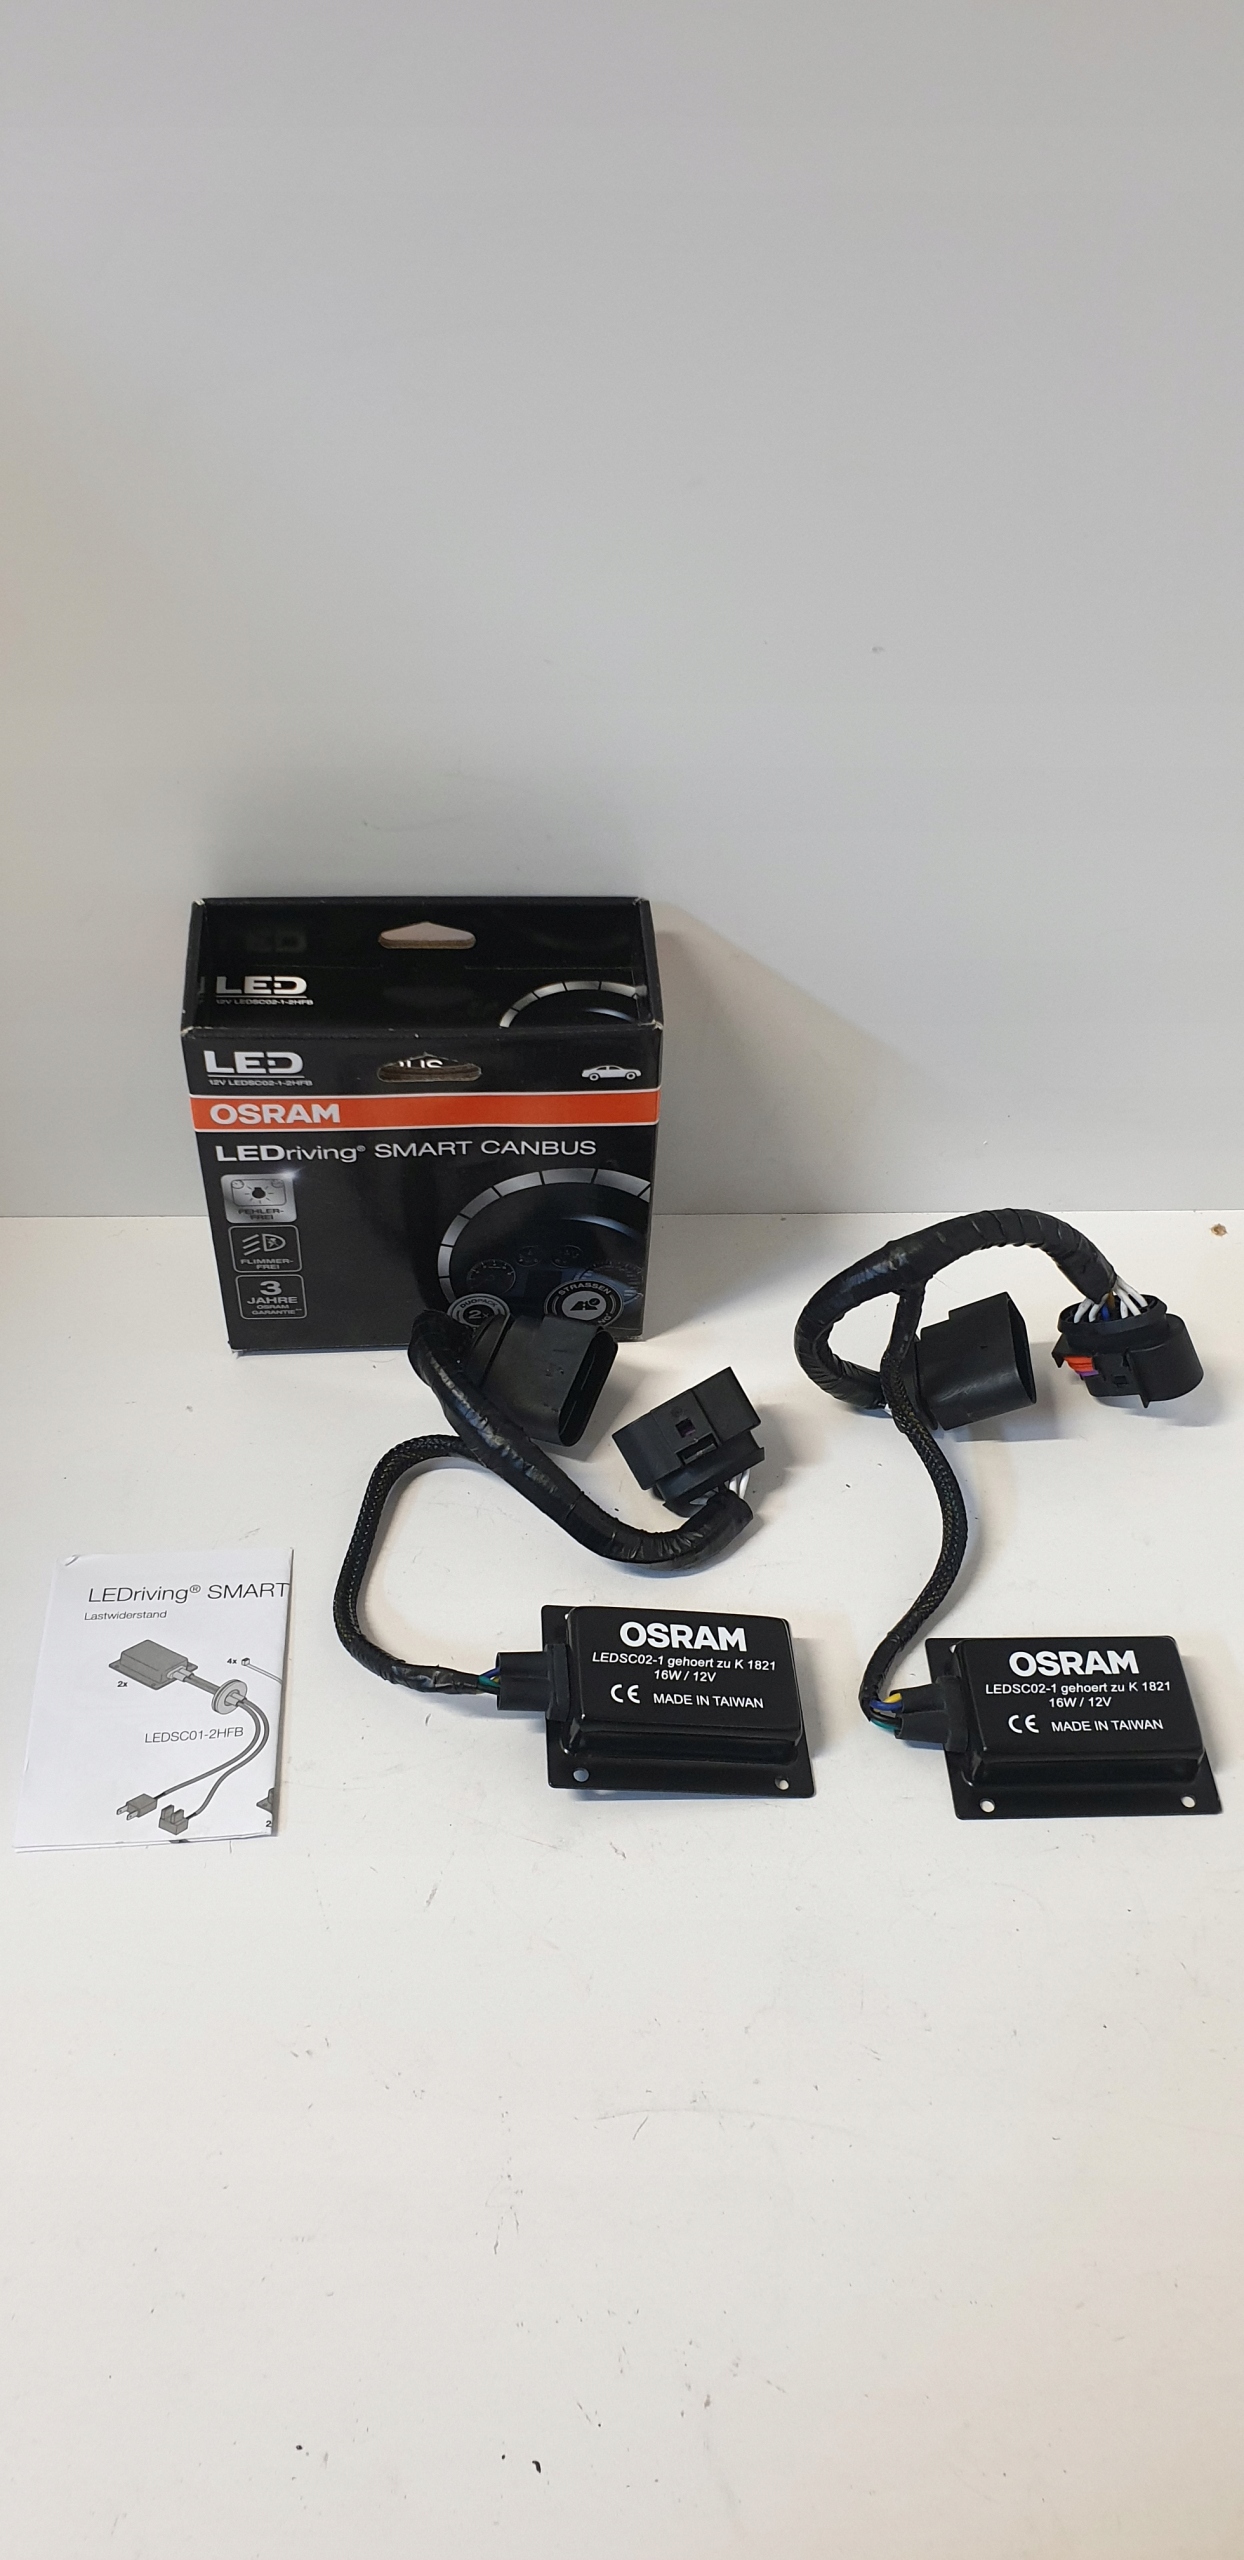 OSRAM LEDSC02-1 LEDriving SMART CANBUS Sterownik Adapter H7 LEDSC02 za  114,80 zł z Otwock -  - (14513772243)